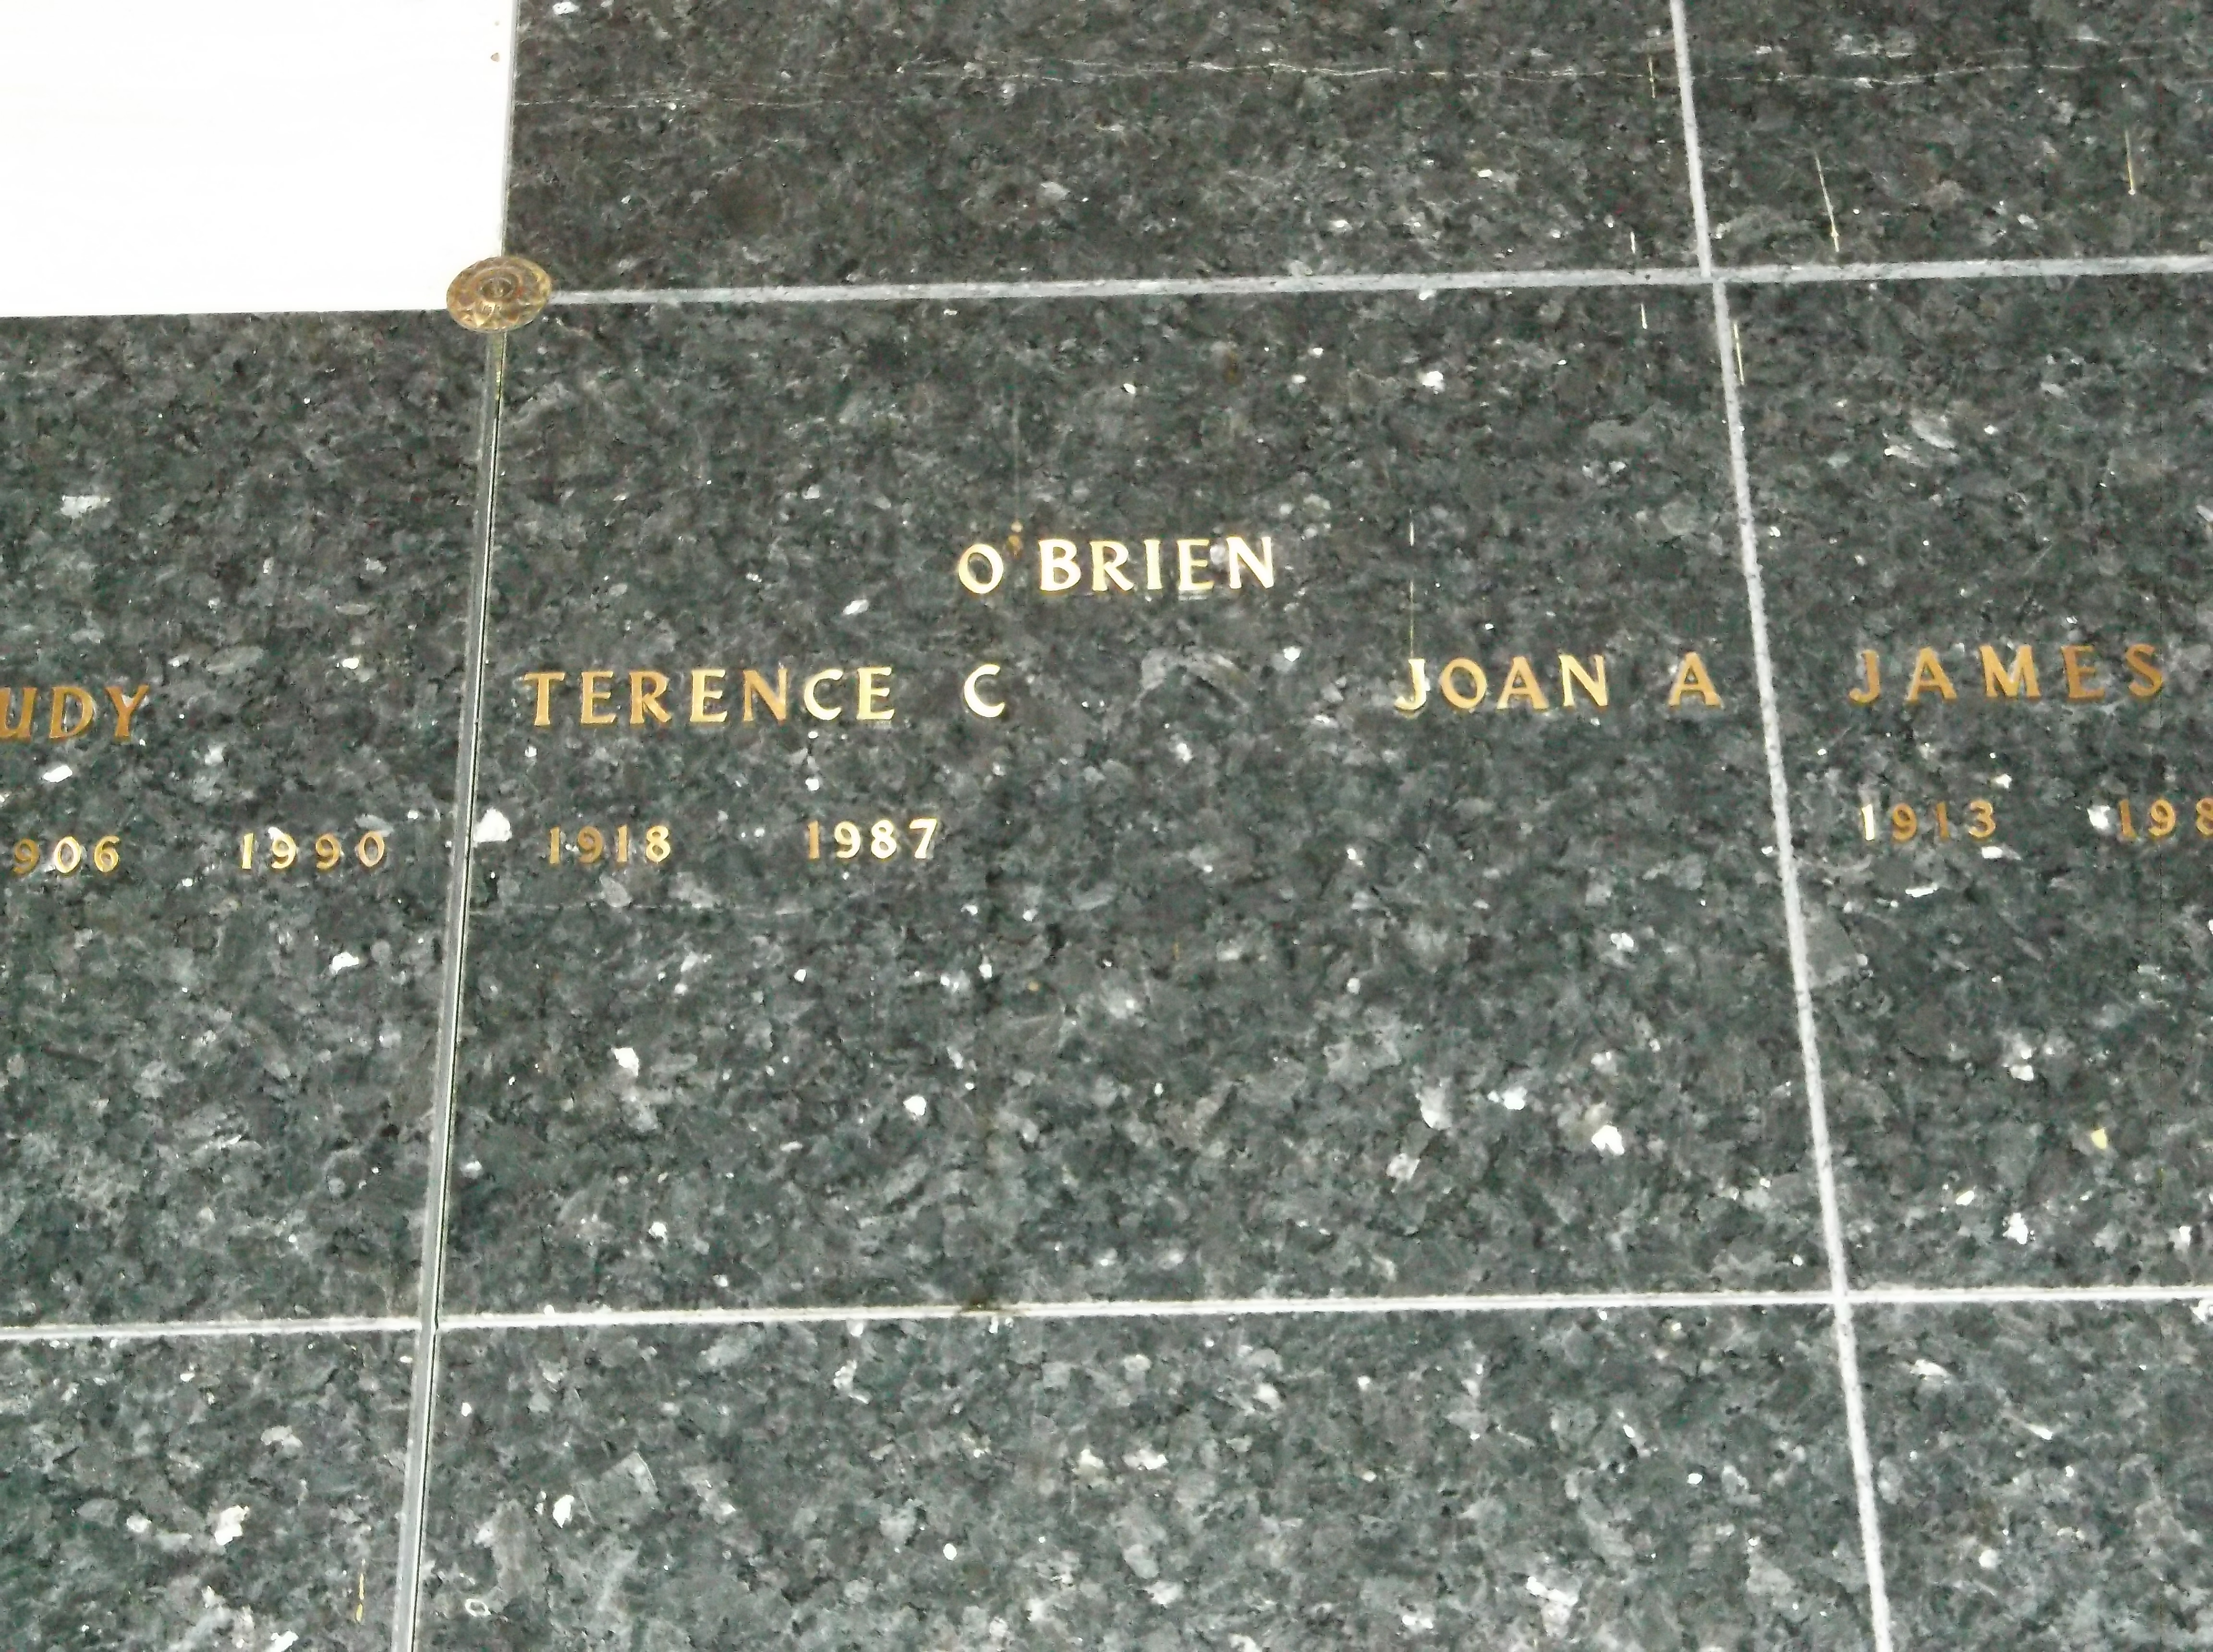 Terence C O'Brien